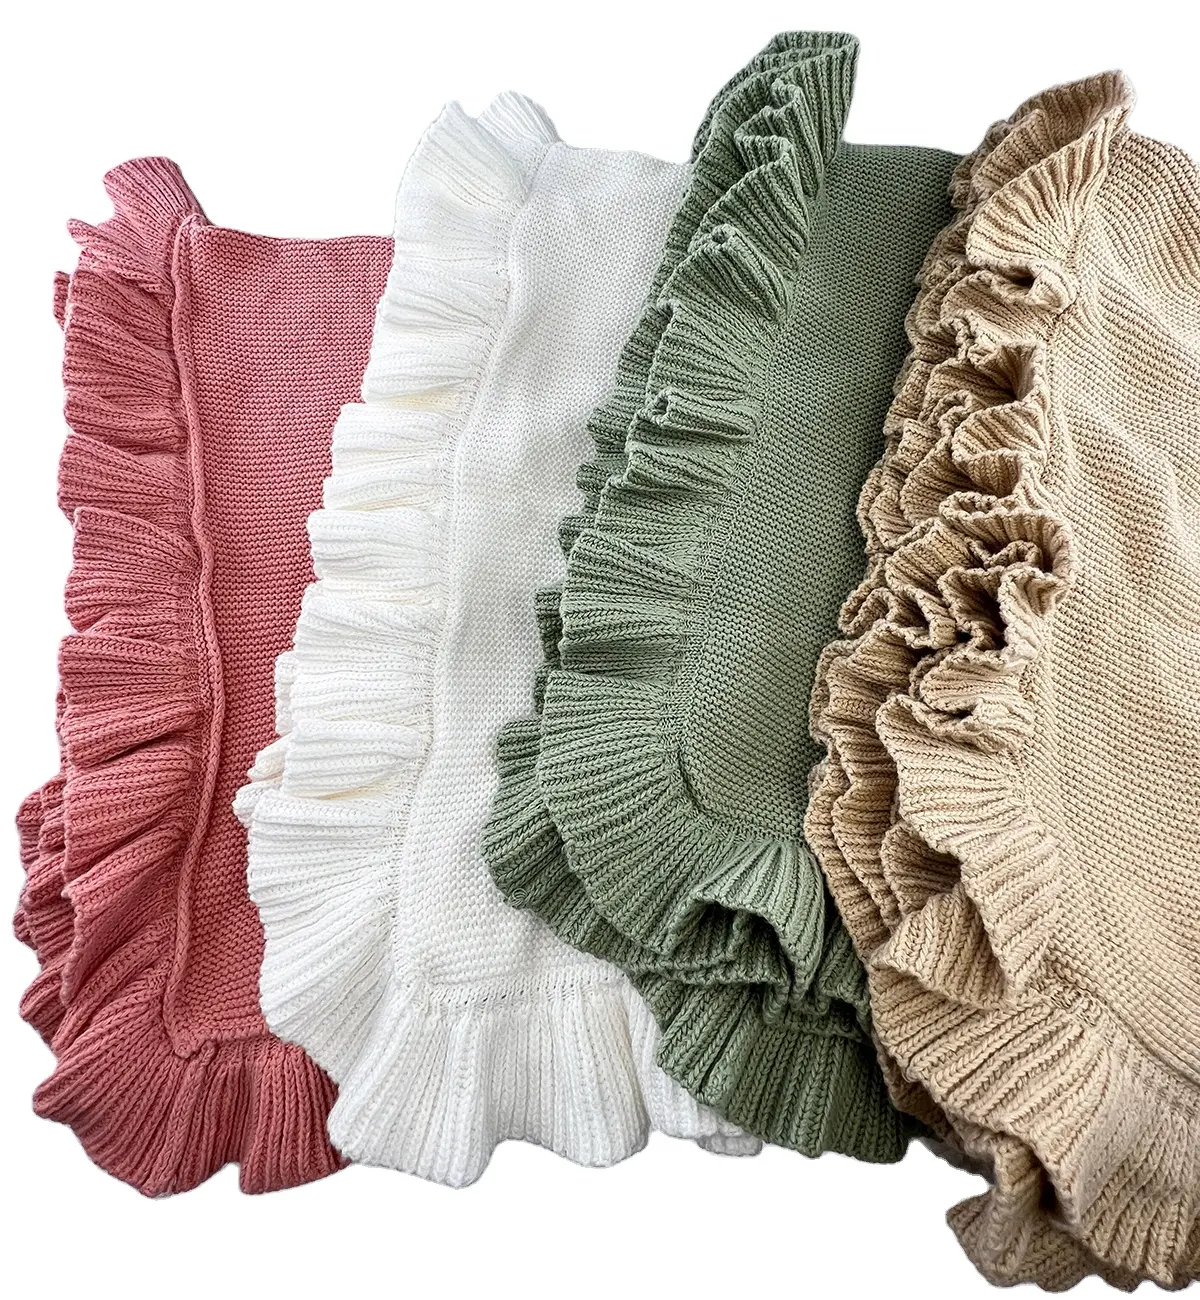 Soft Plain Crochet Wrap Swaddle Blanket Newborn Cotton Knitted Ruffle Blanket for baby